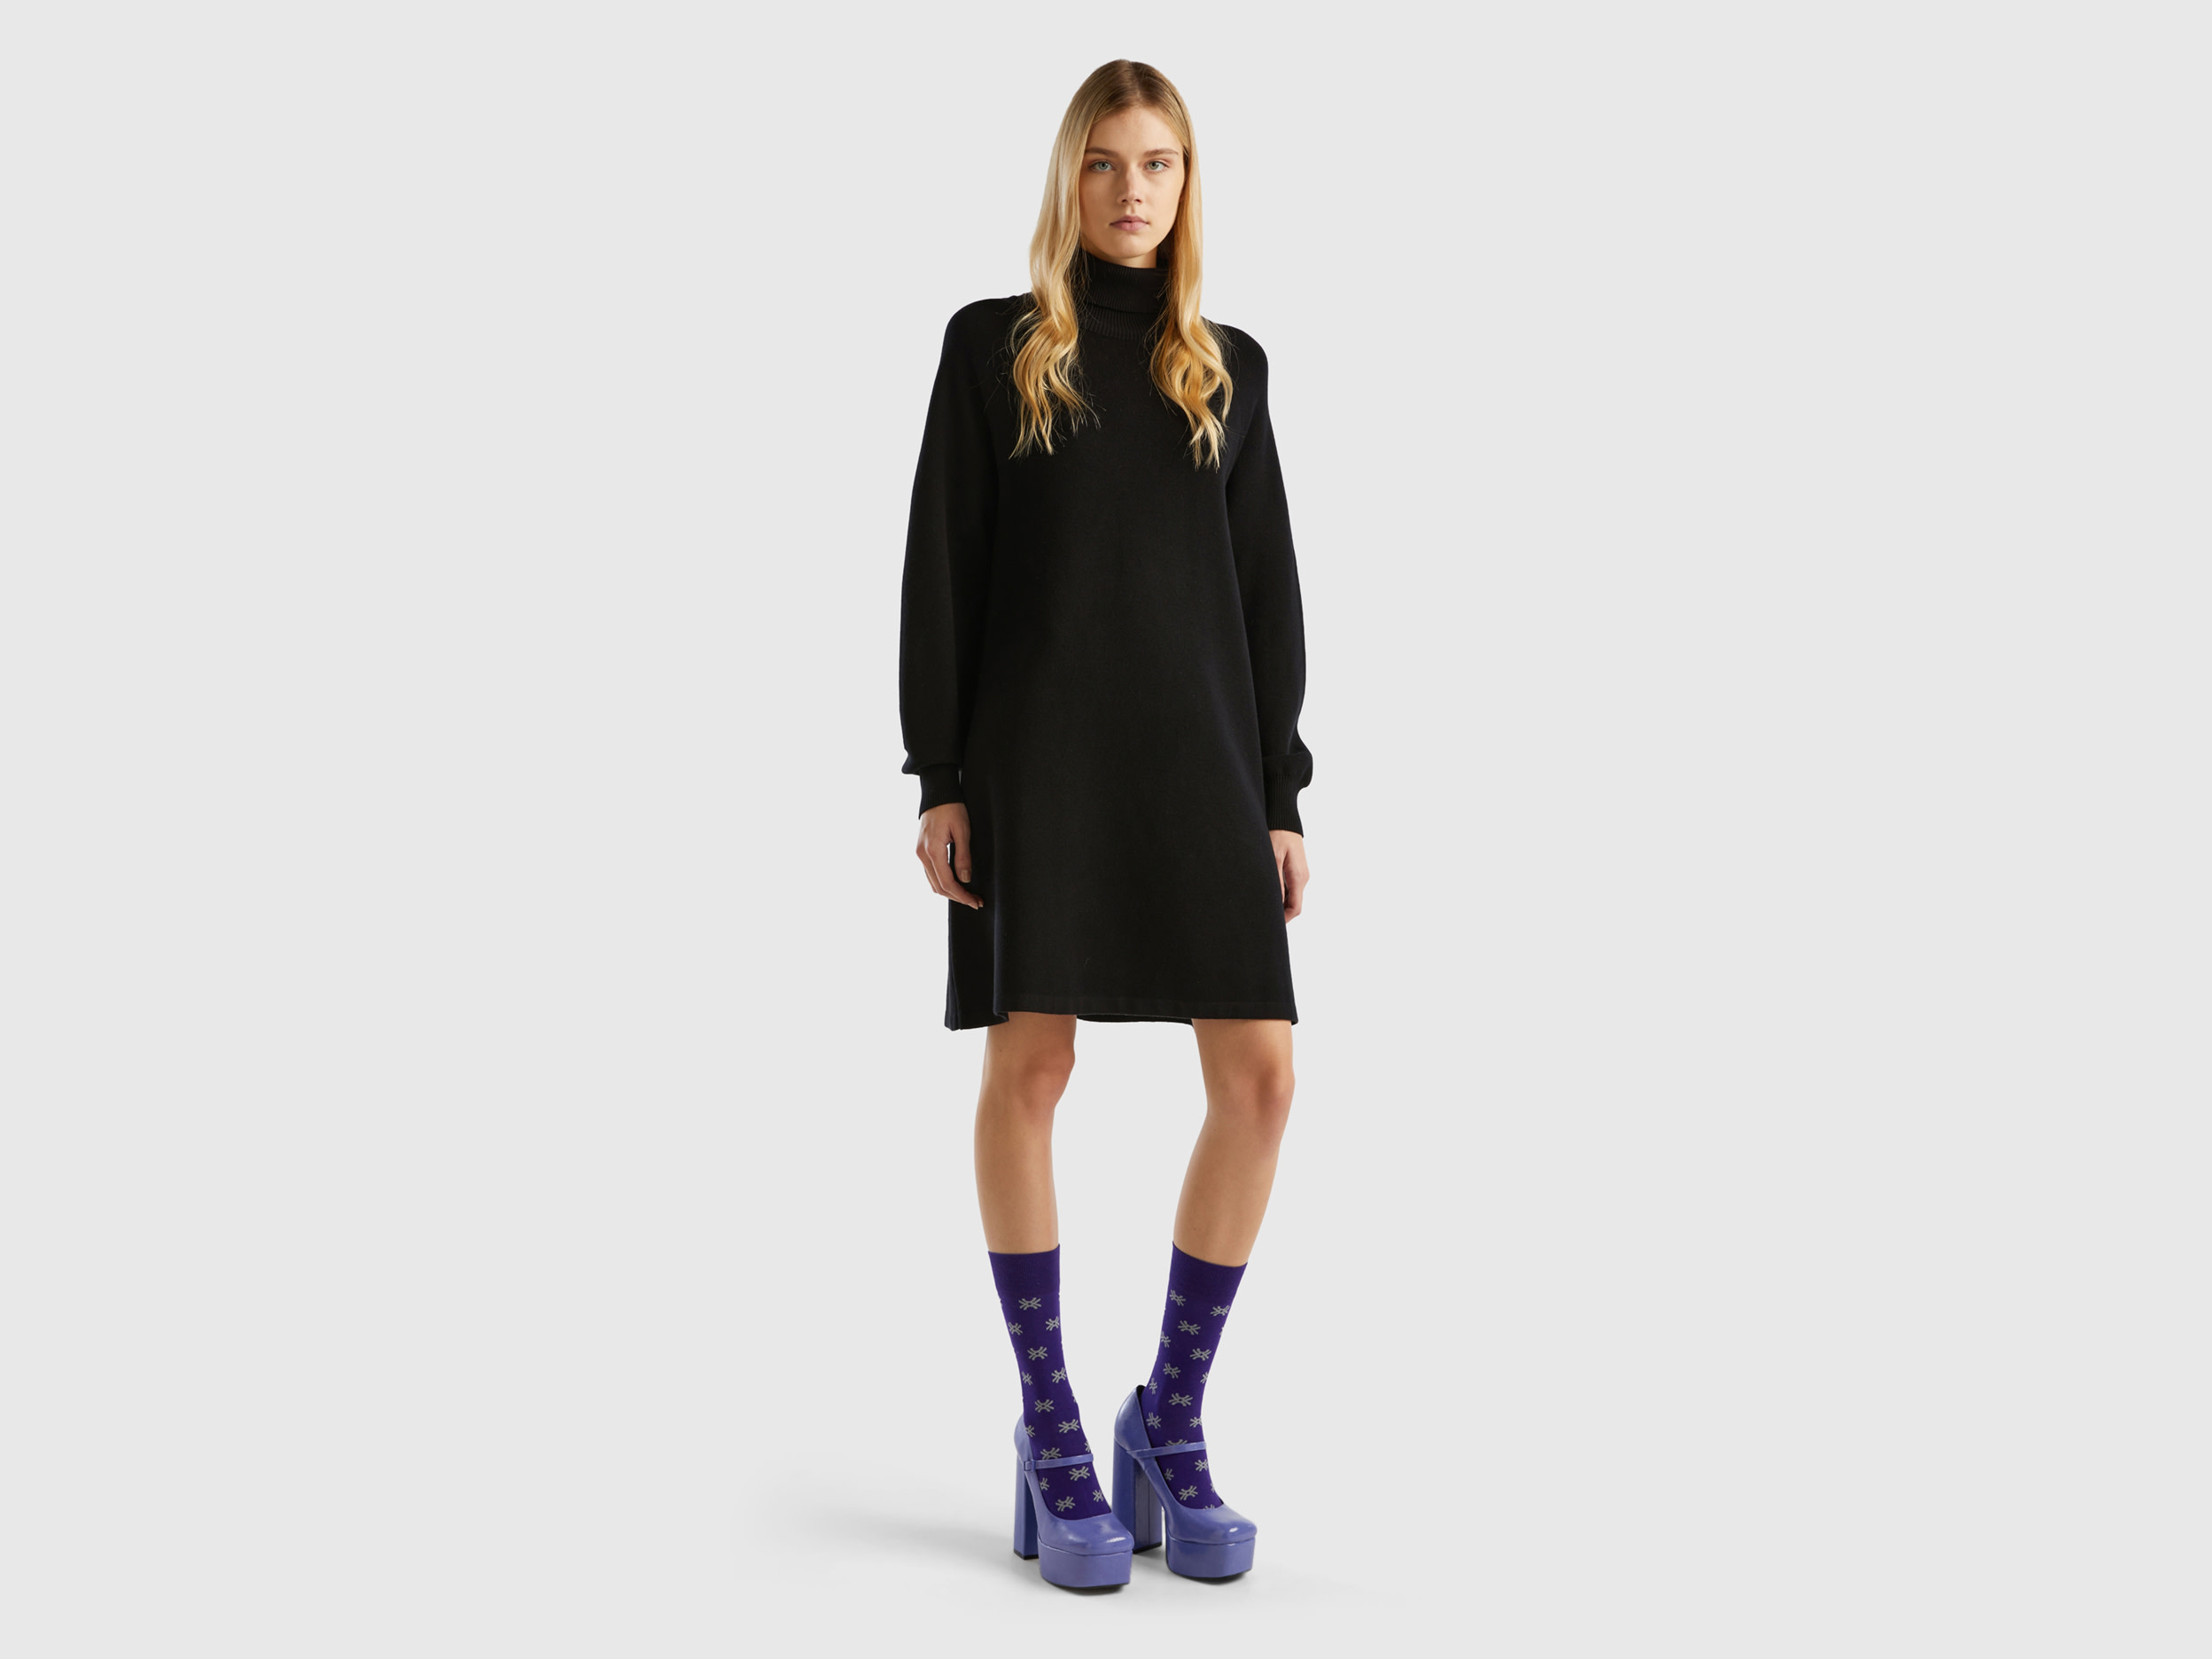 Benetton, Knit Dress With High Neck, size L-XL, Black, Women